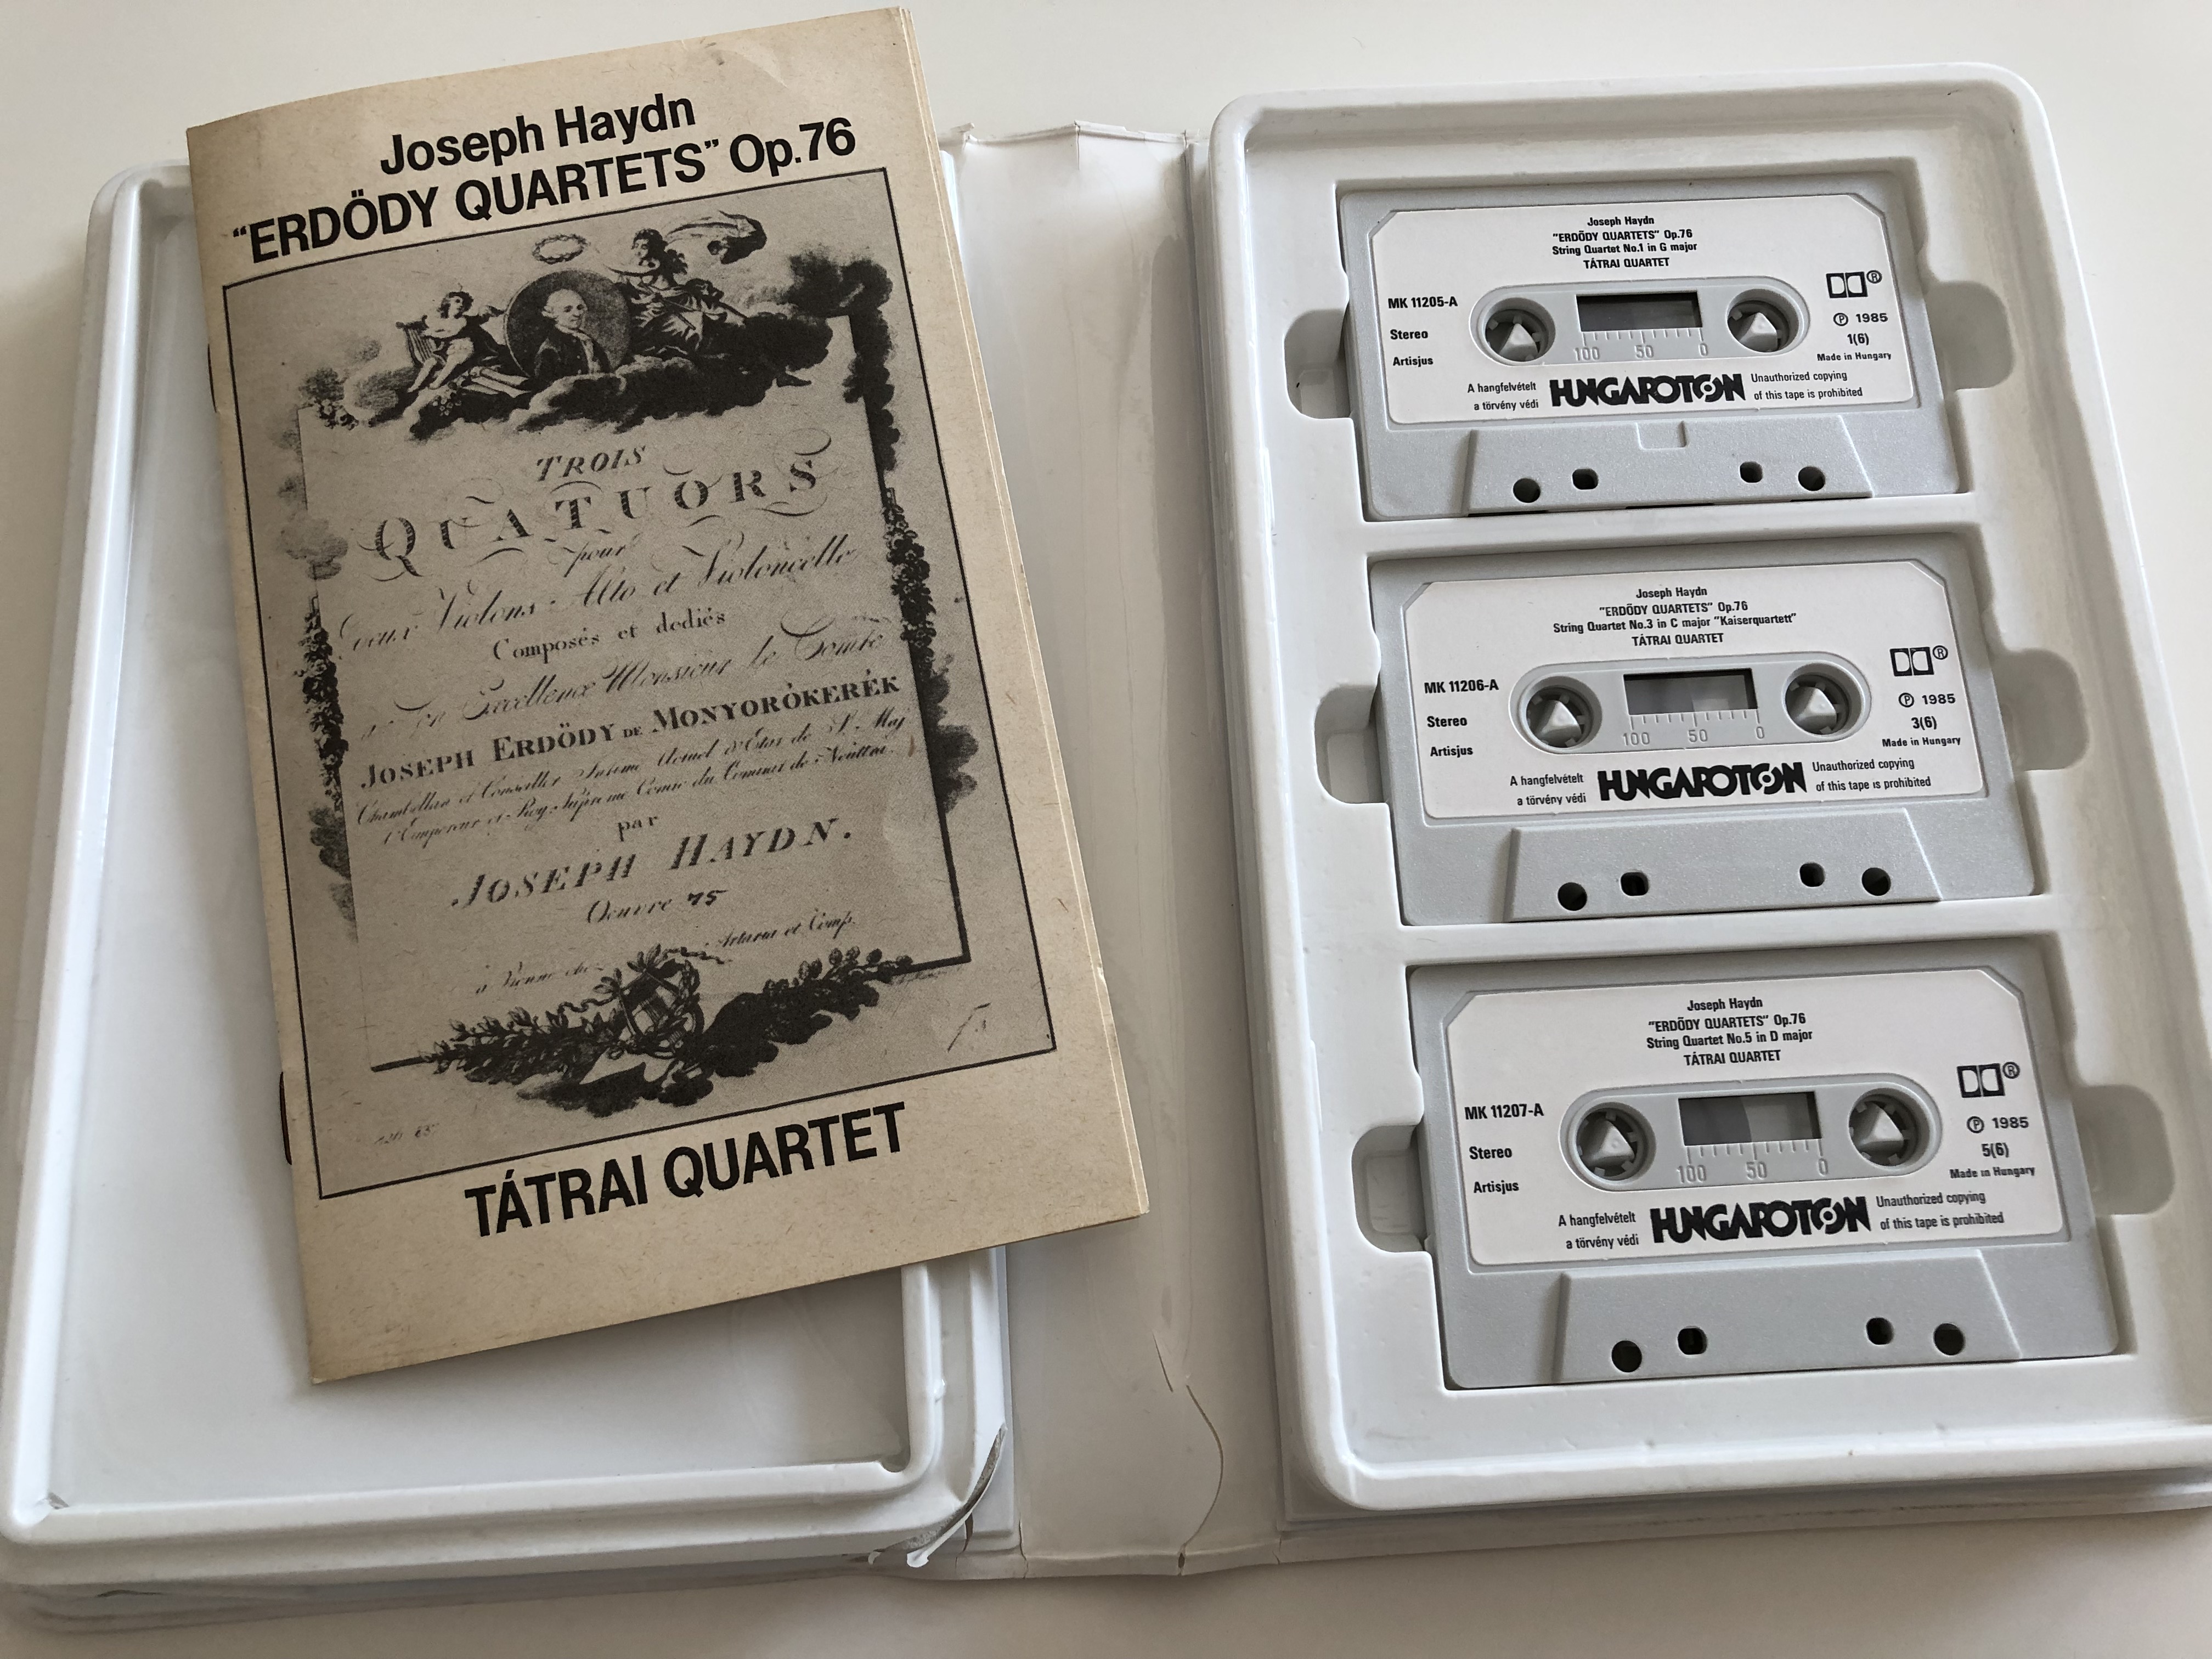 joseph-haydn-erd-dy-quartets-op.-76-t-trai-quartet-hungaroton-3x-audio-cassette-1989-stereo-mk-11205-07-4-.jpg